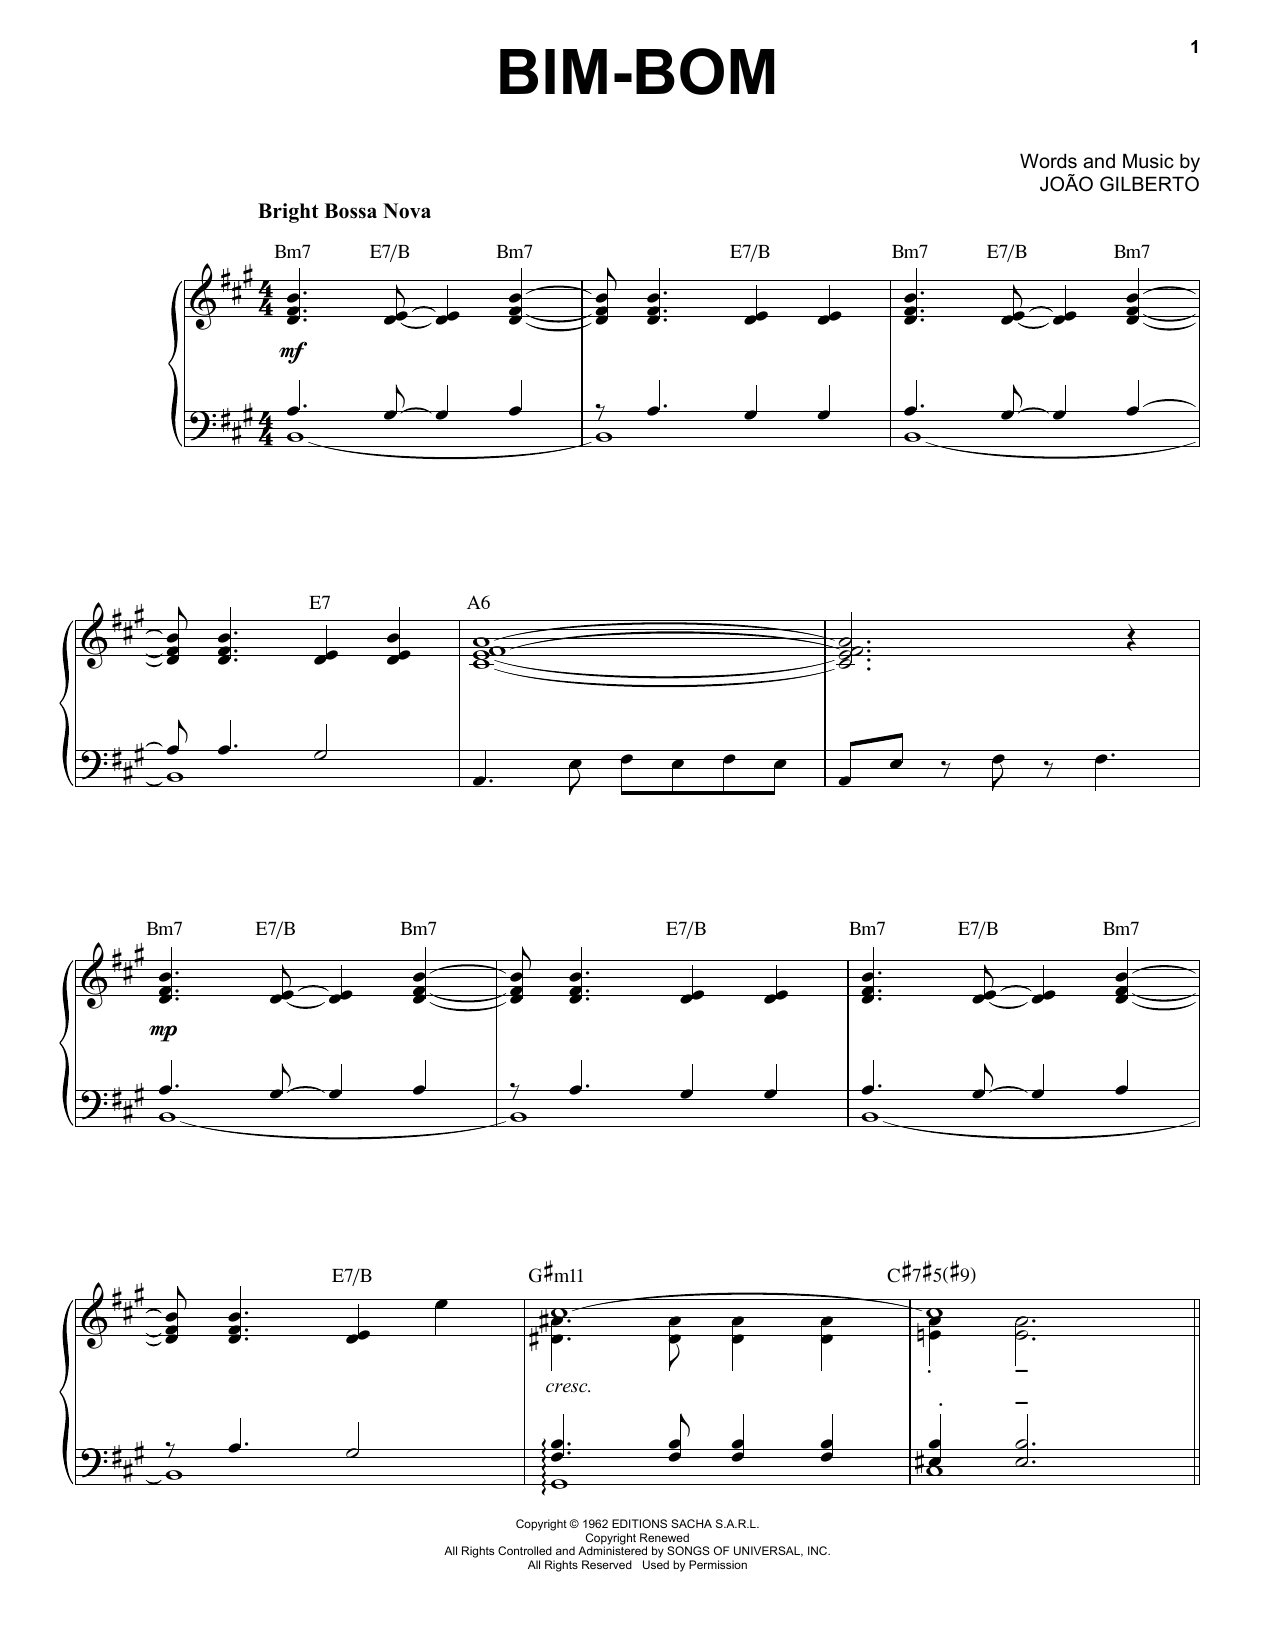 Joao Gilberto Bim-Bom [Jazz version] (arr. Brent Edstrom) Sheet Music Notes & Chords for Piano - Download or Print PDF